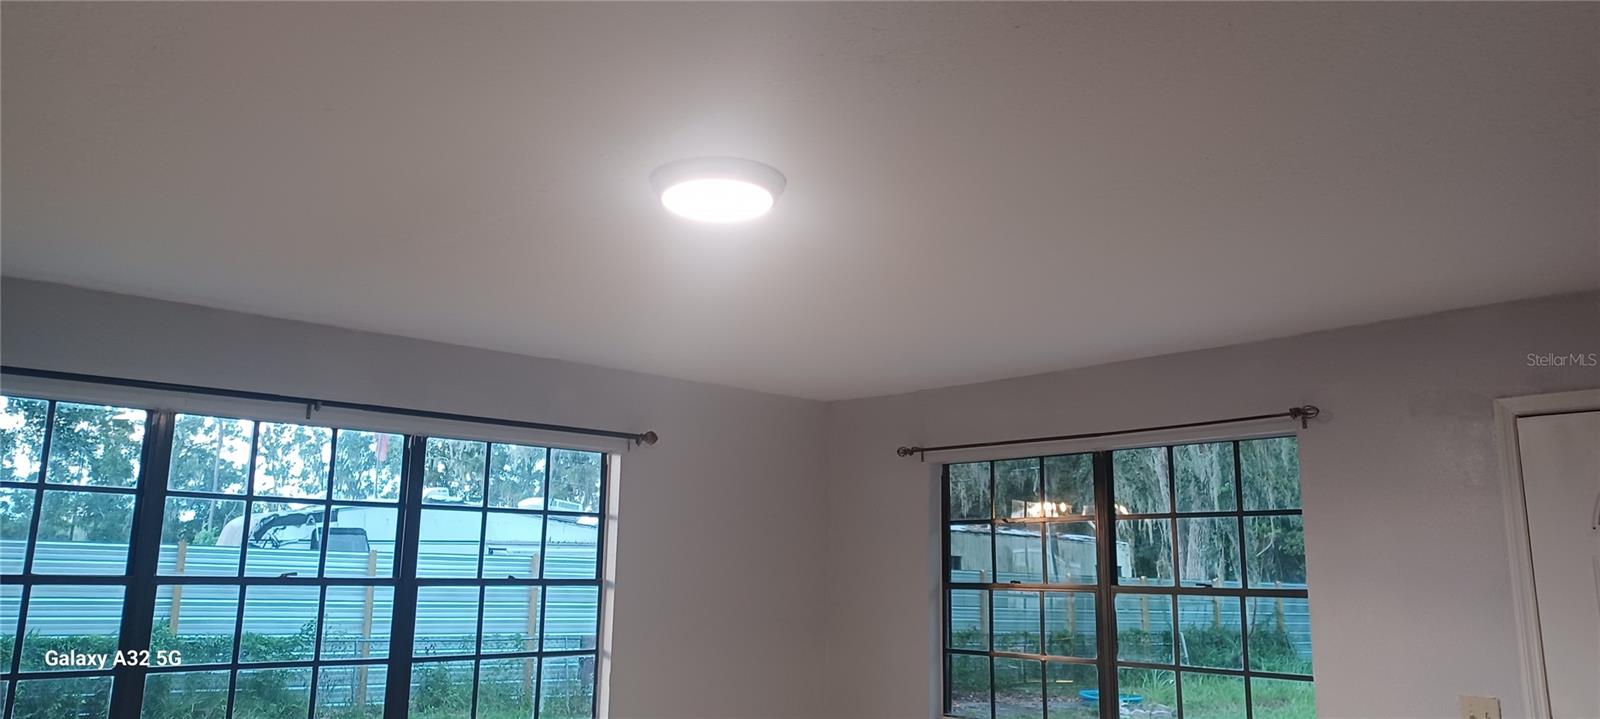 new energy saving lights in family room